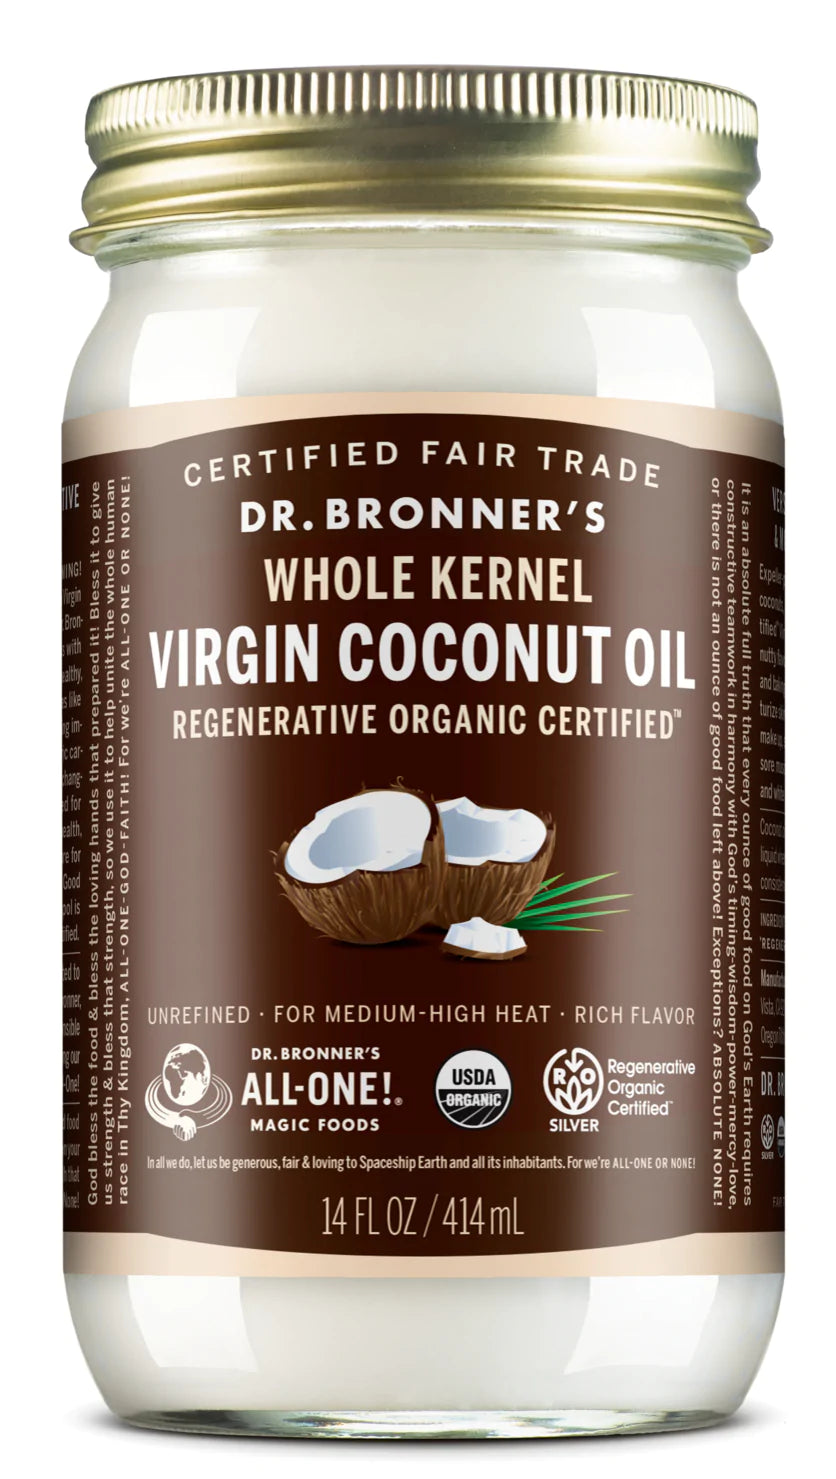 Virgin Coconut Oil - Case of 6